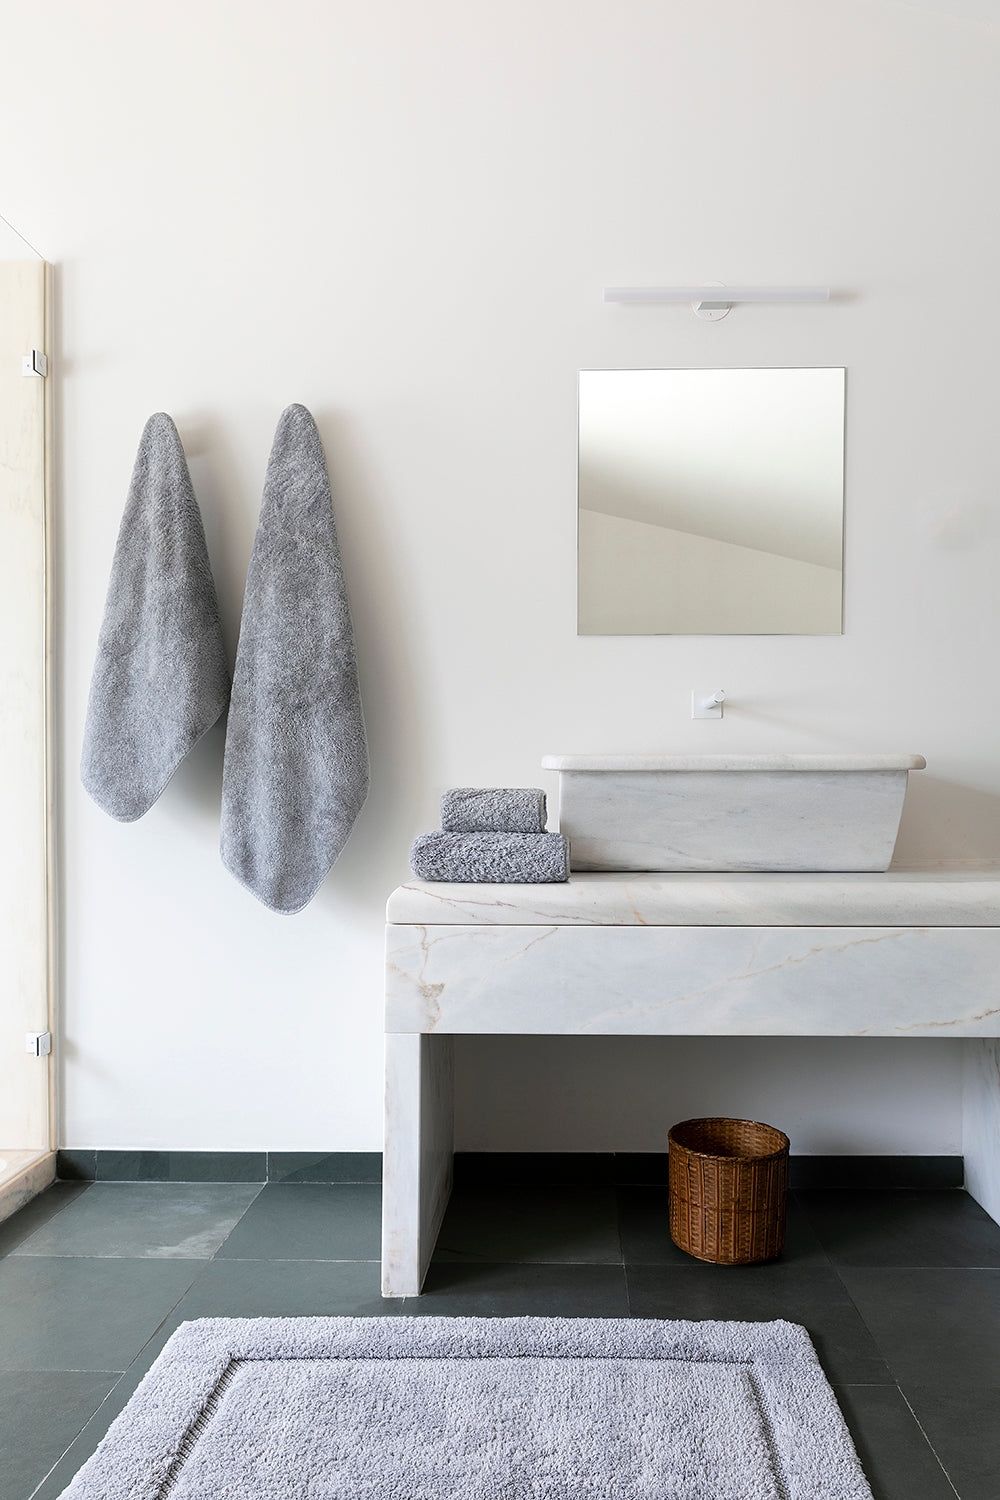 Graccioza Luxury Bath Towels - Made in Portugal